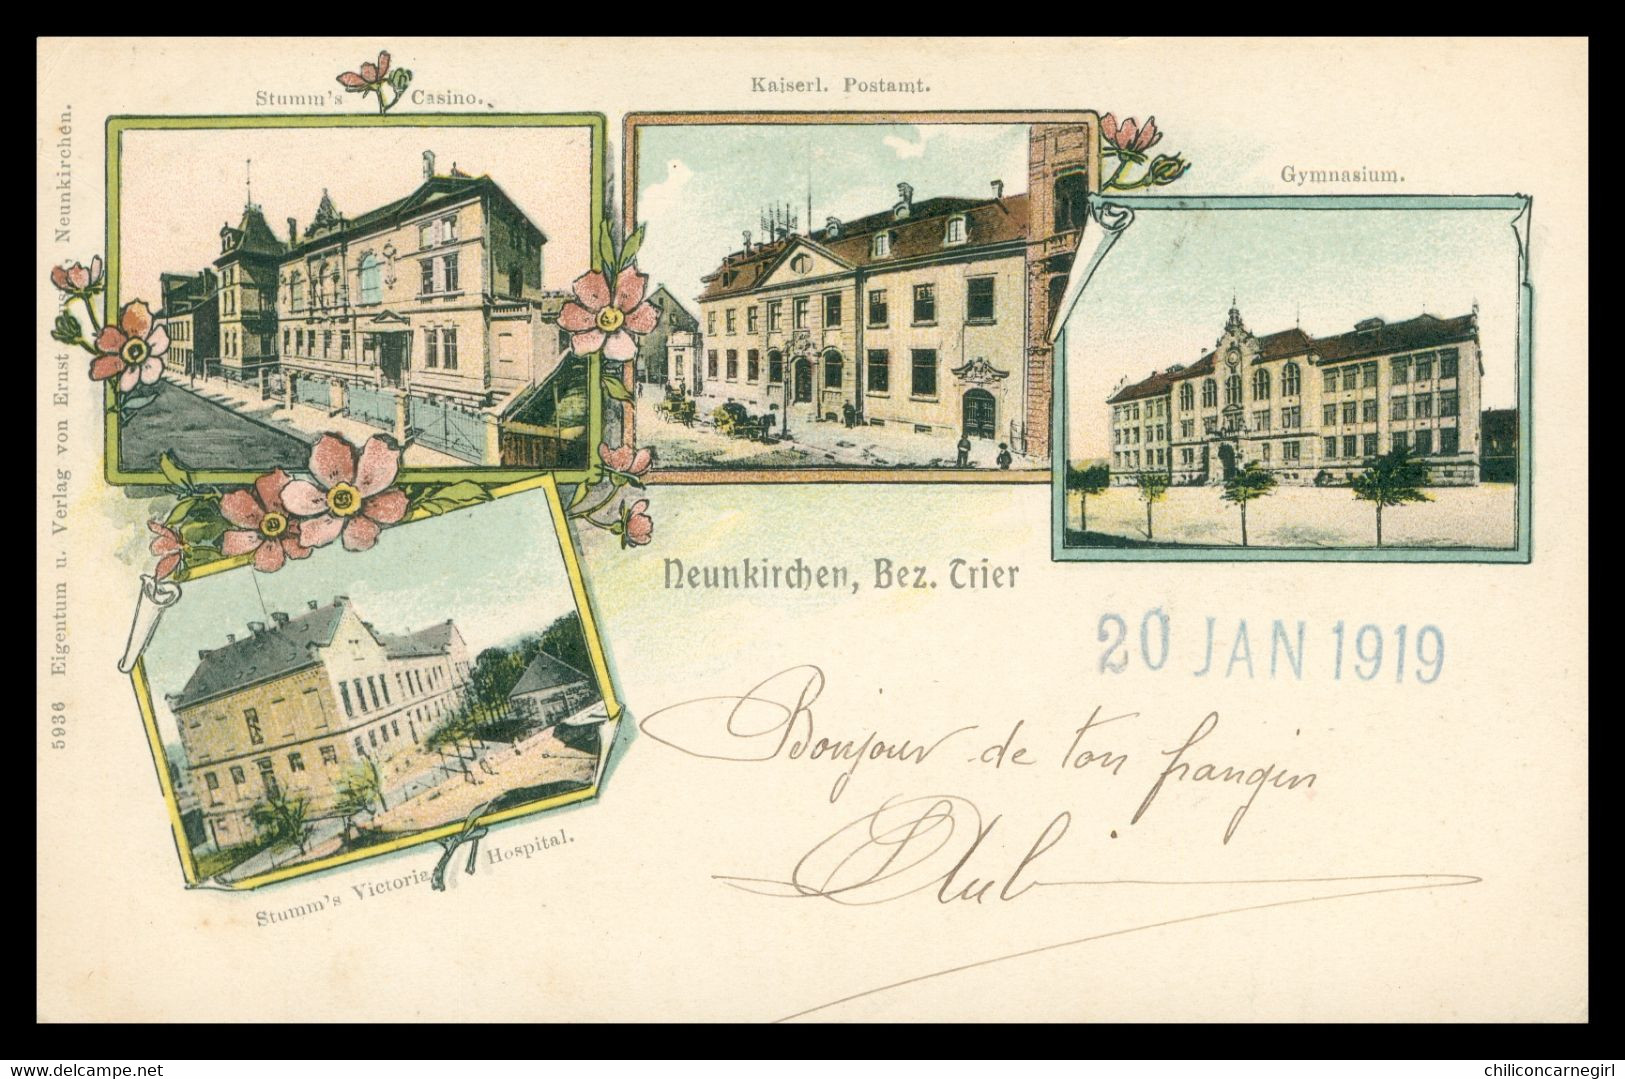 * Litho - NEUNKIRCHEN - BEZ - TRIER - Stumm's Casino Victoria Hospital - Kaiserl. Postamt - Gymnasium - 1919 - Kreis Neunkirchen